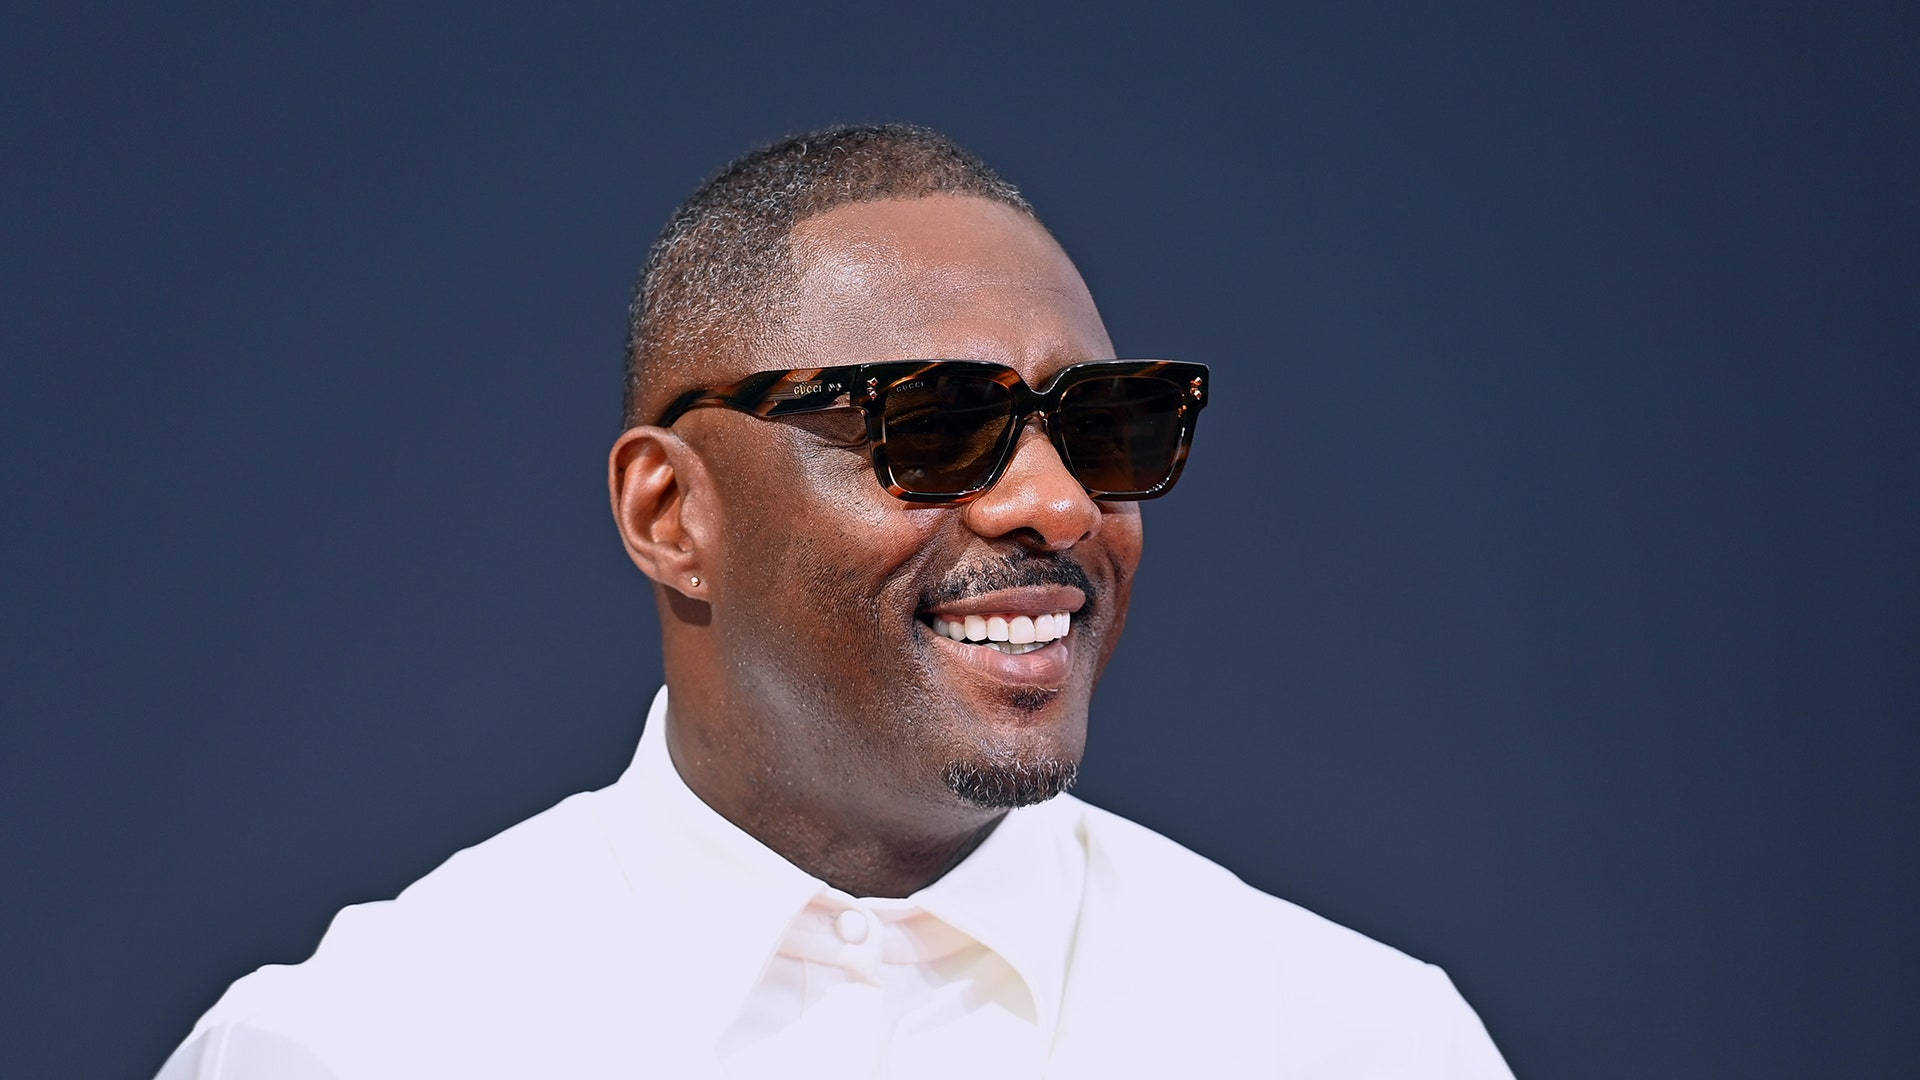 Idris Elba With Sunglasses Wallpaper